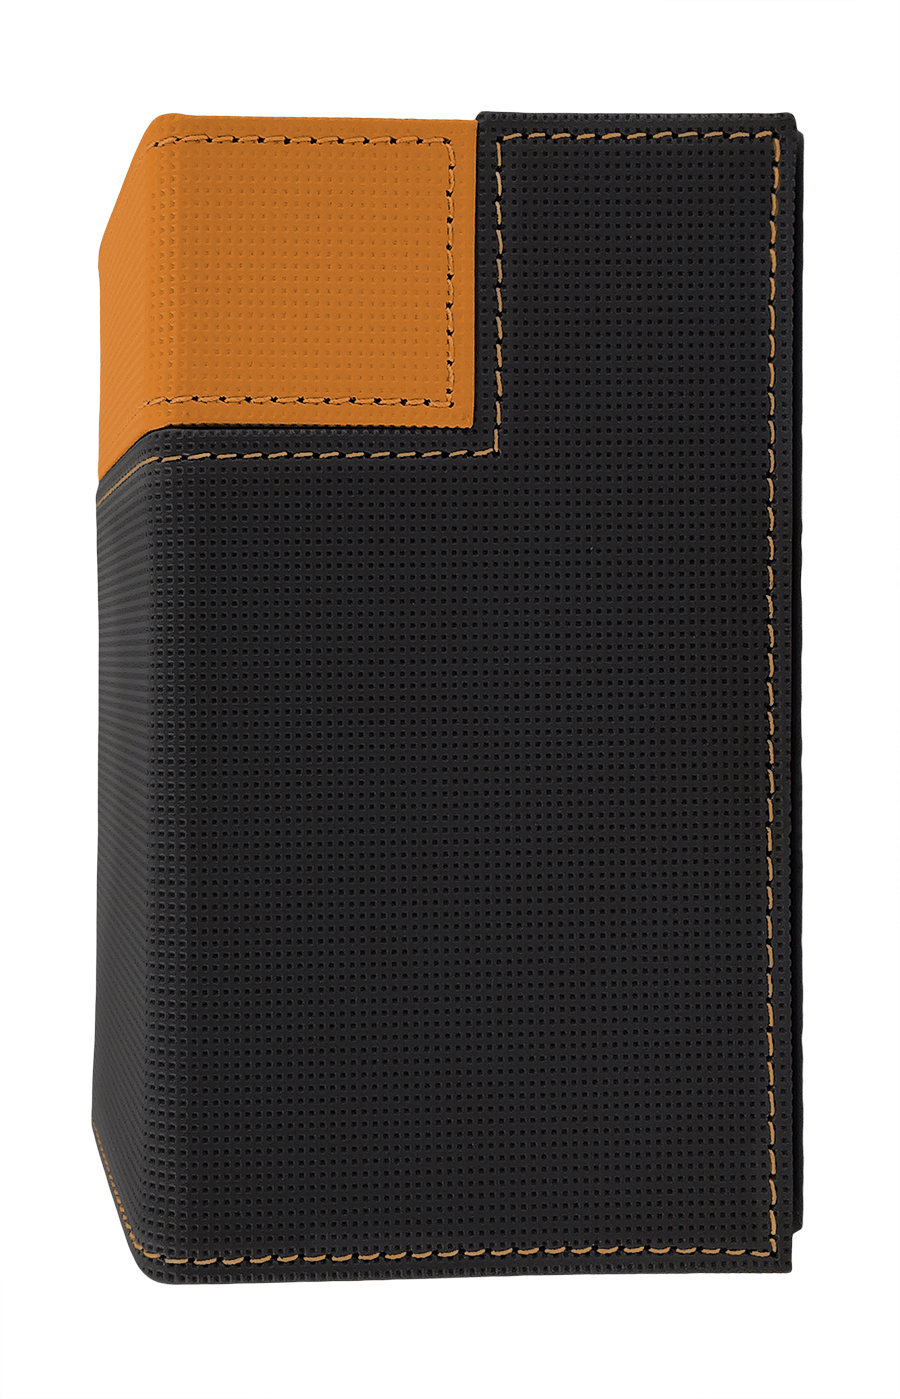 ultra-uro-m2-deckbox-black-and-orange-20151229.jpg